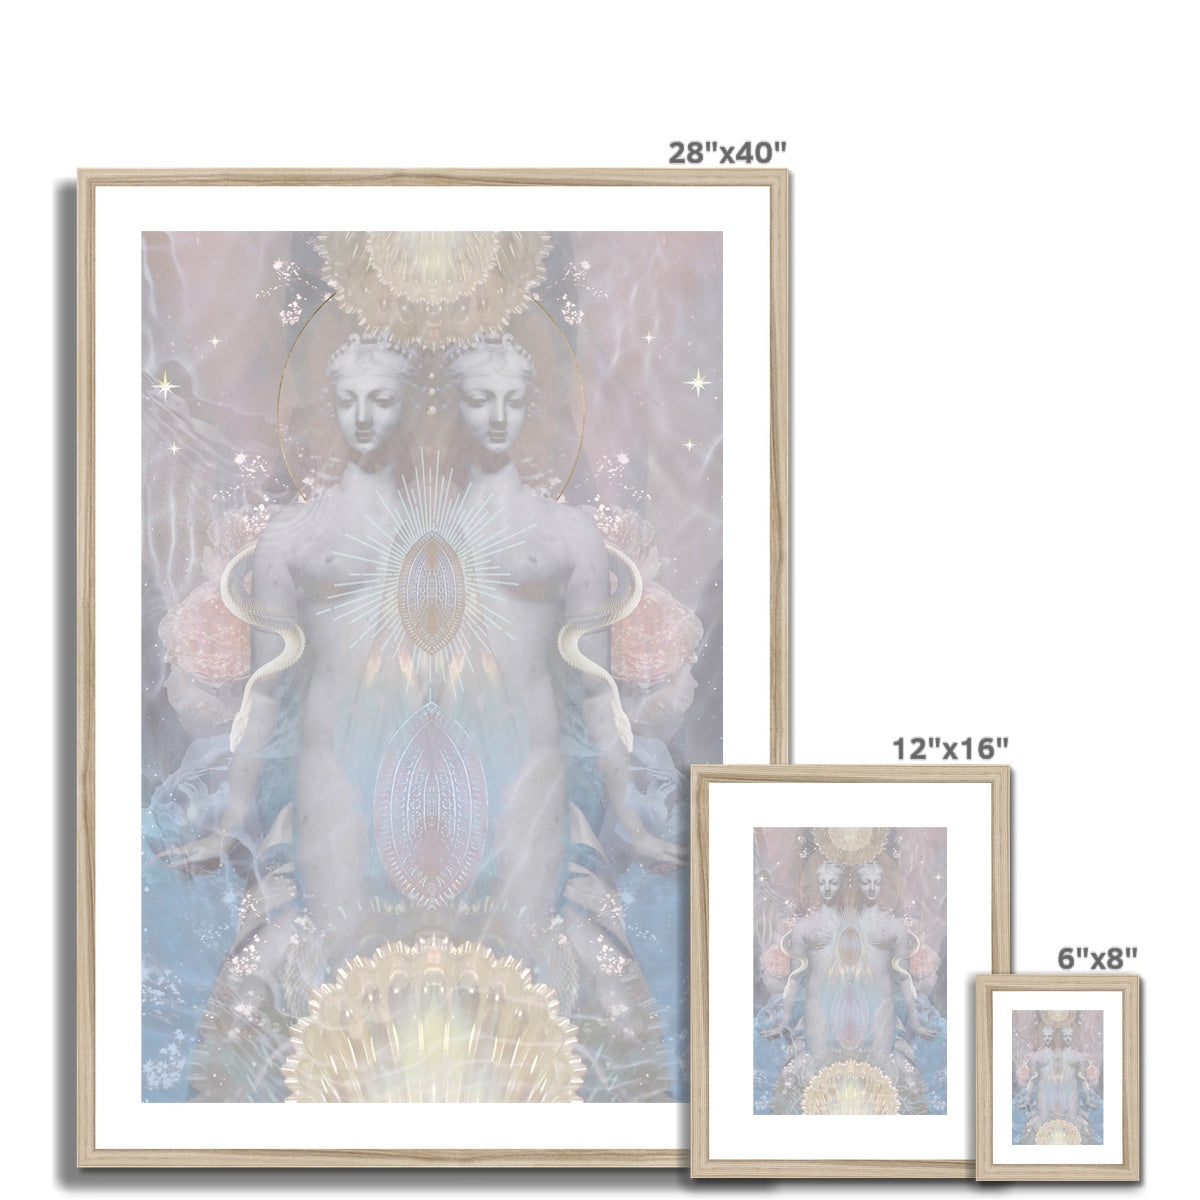 Venus  Framed & Mounted Print - Starseed Designs Inc.